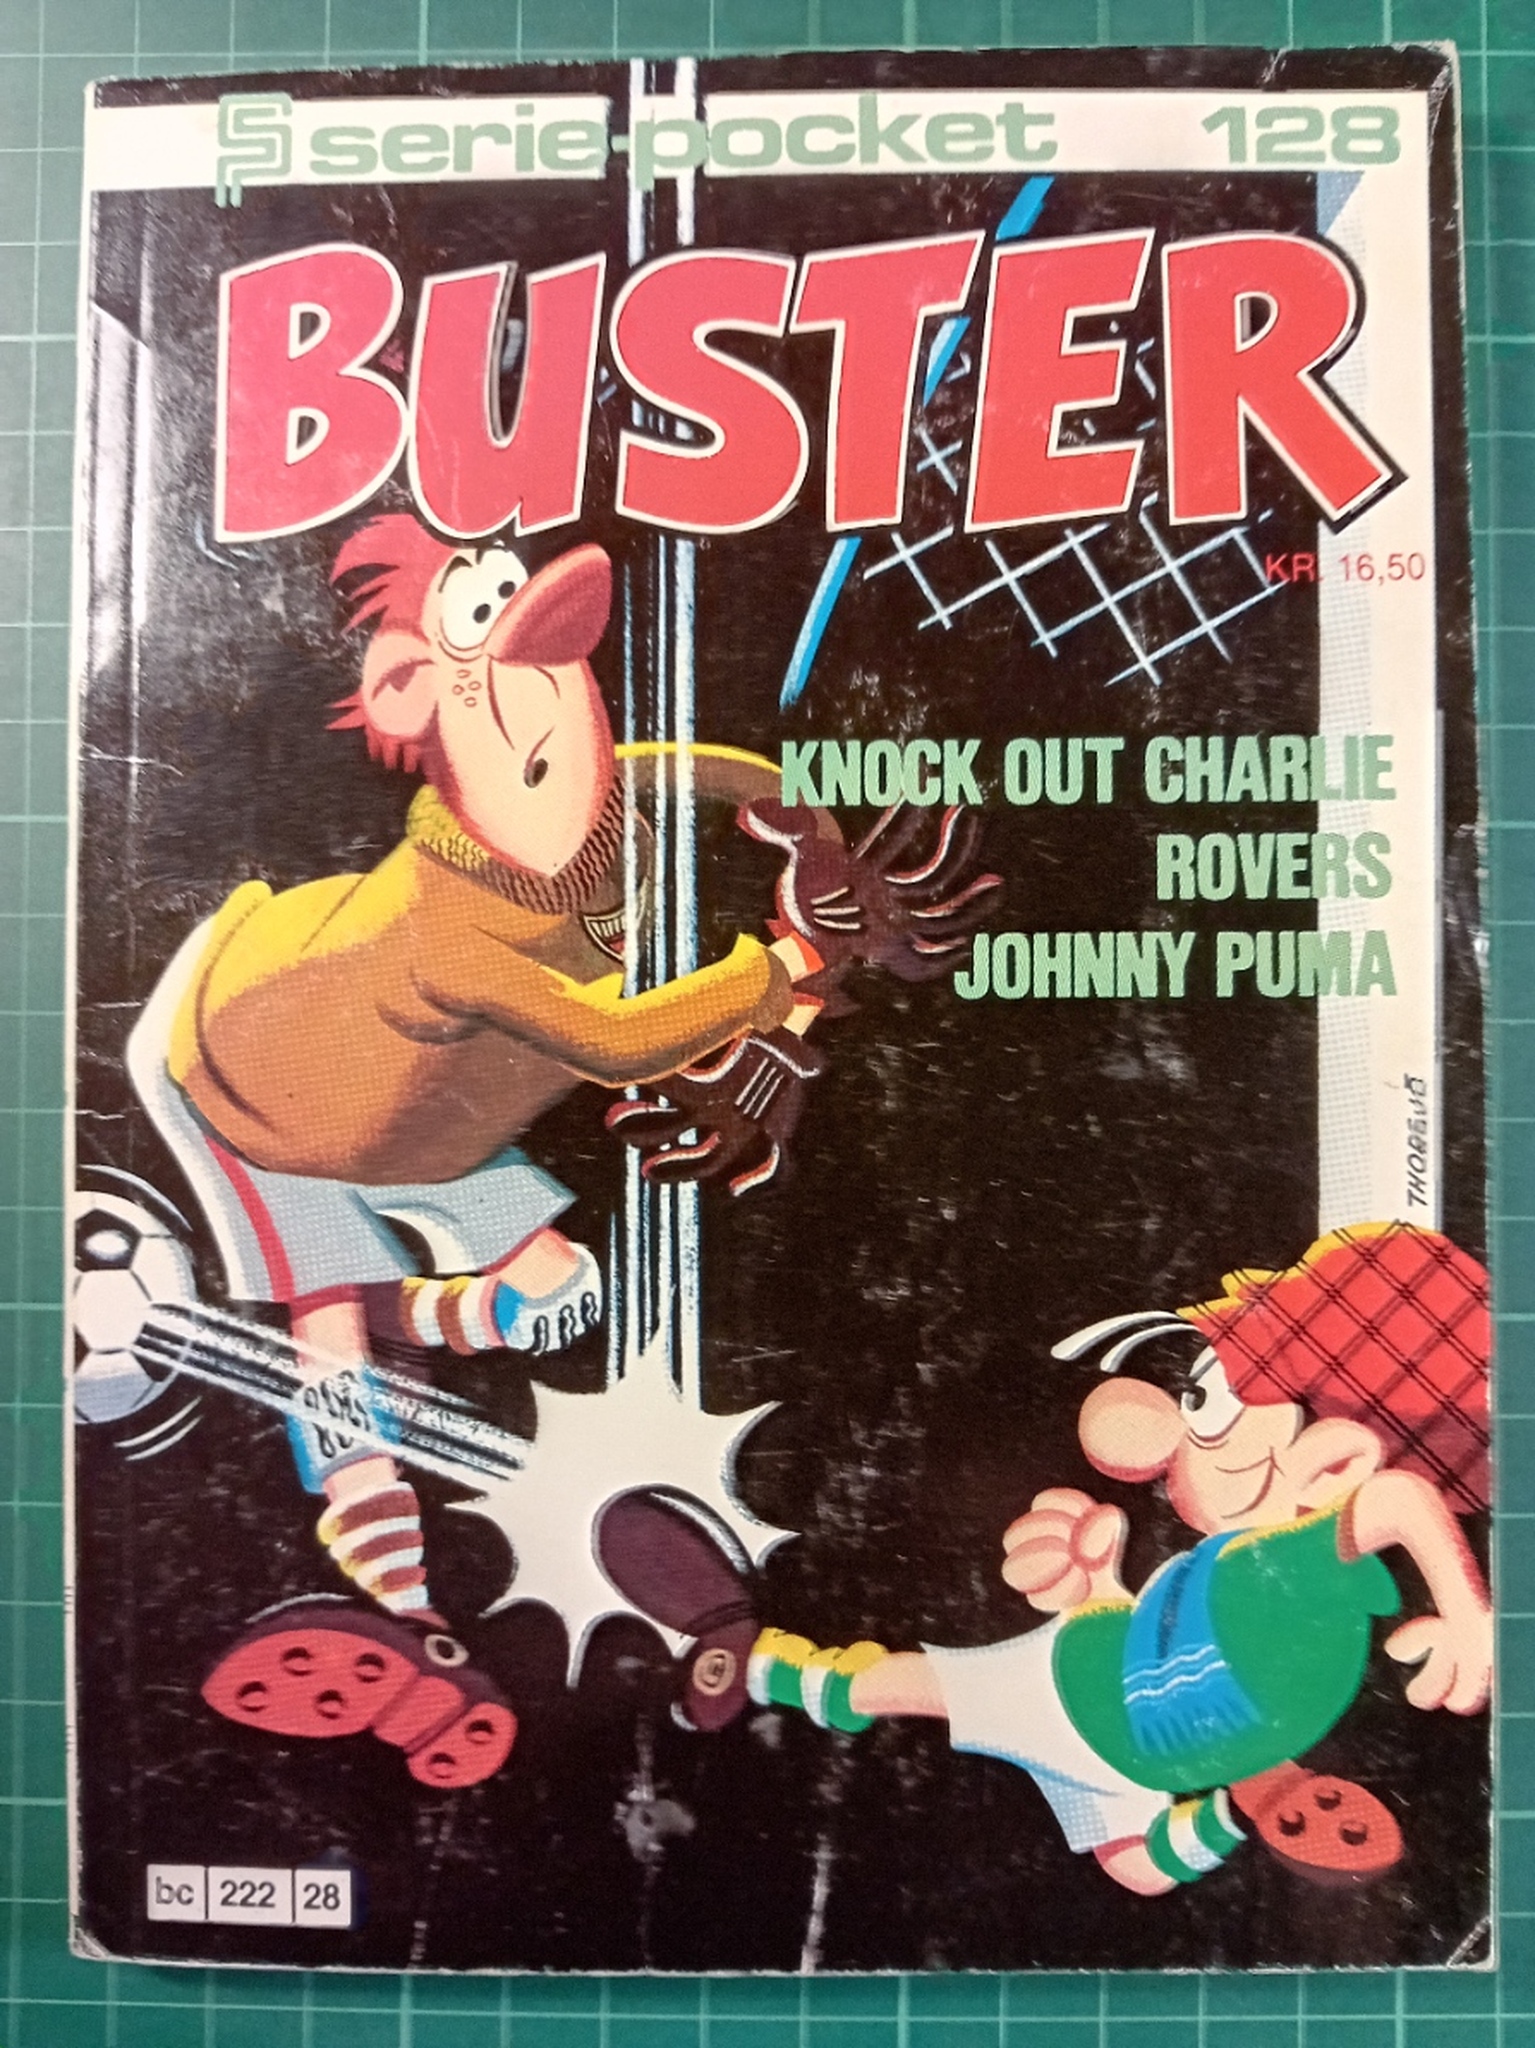 Serie-pocket 128 : Buster